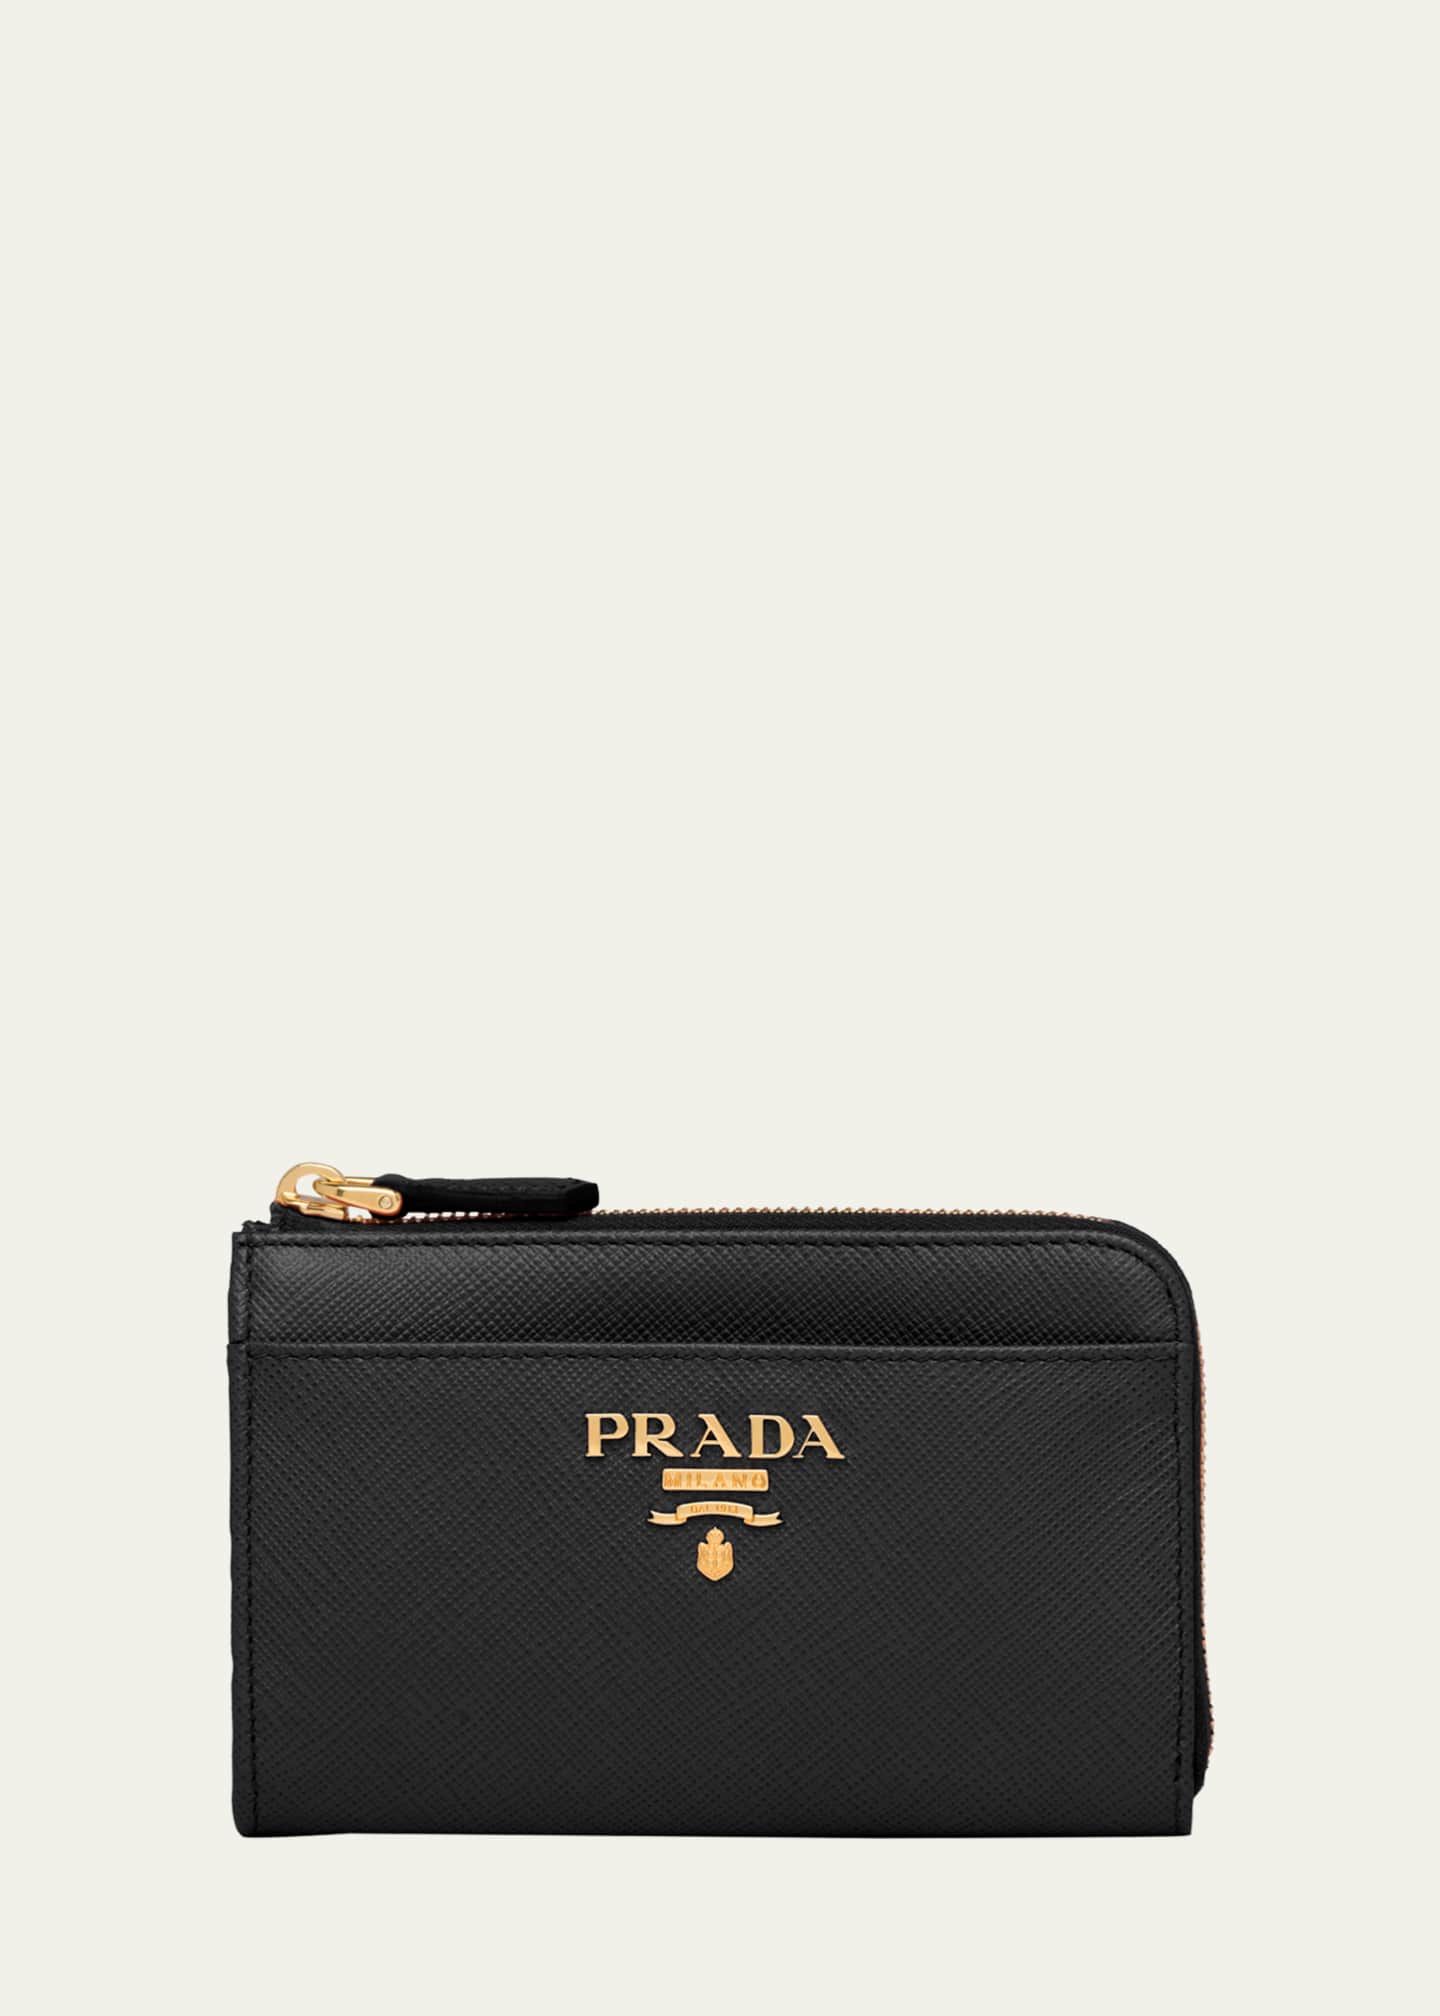 prada saffiano leather card holder with shoulder strap